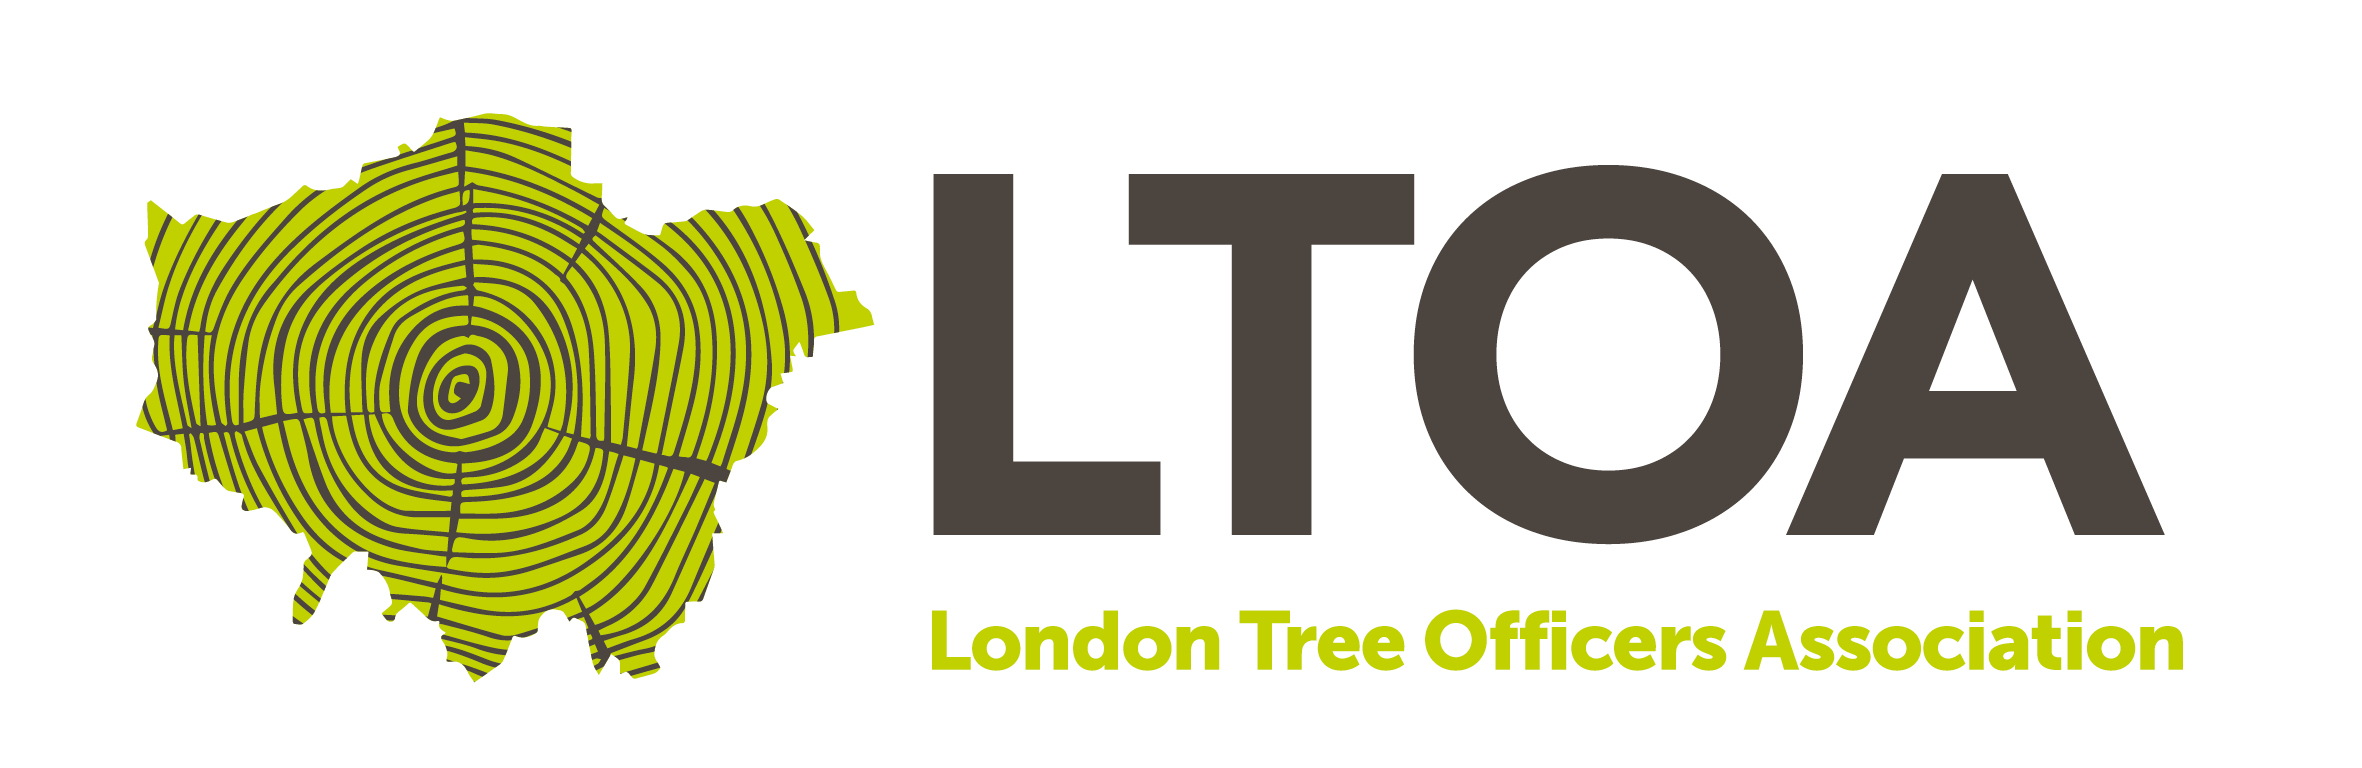 London Tree Officers Association logo